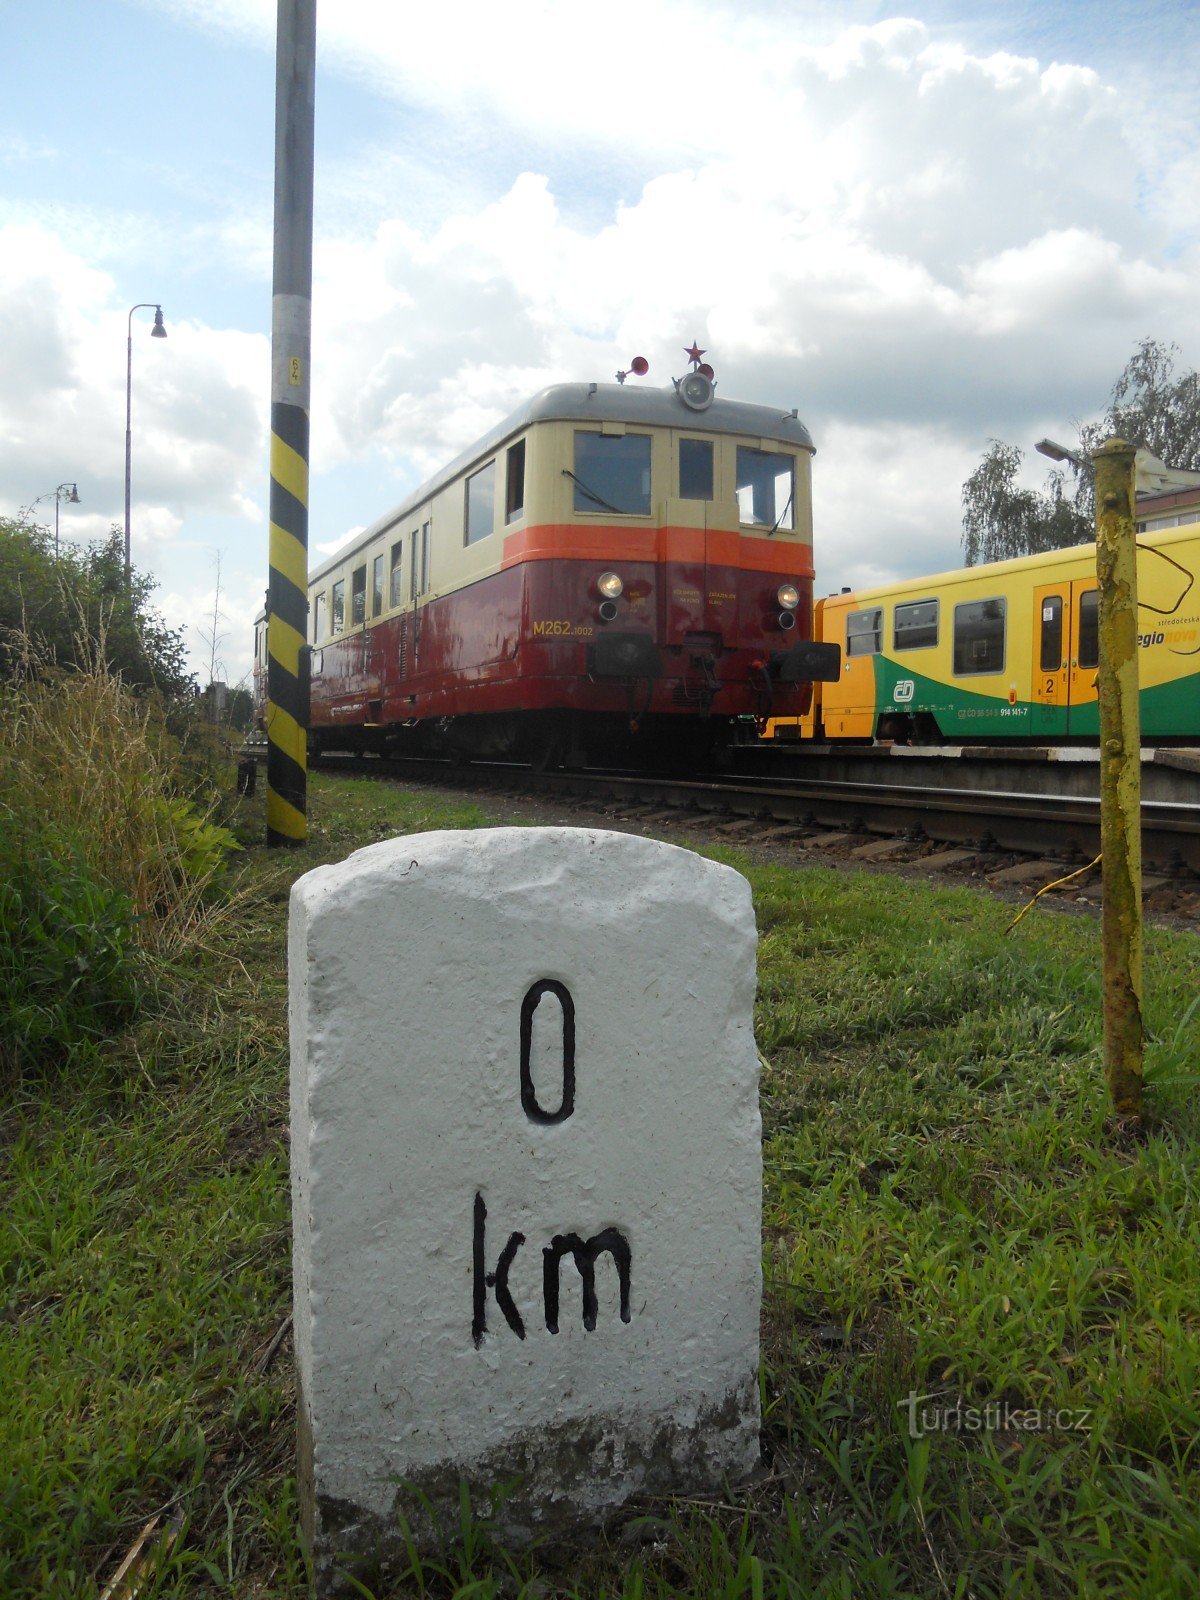 M262.1002 arrives at Jičín station.